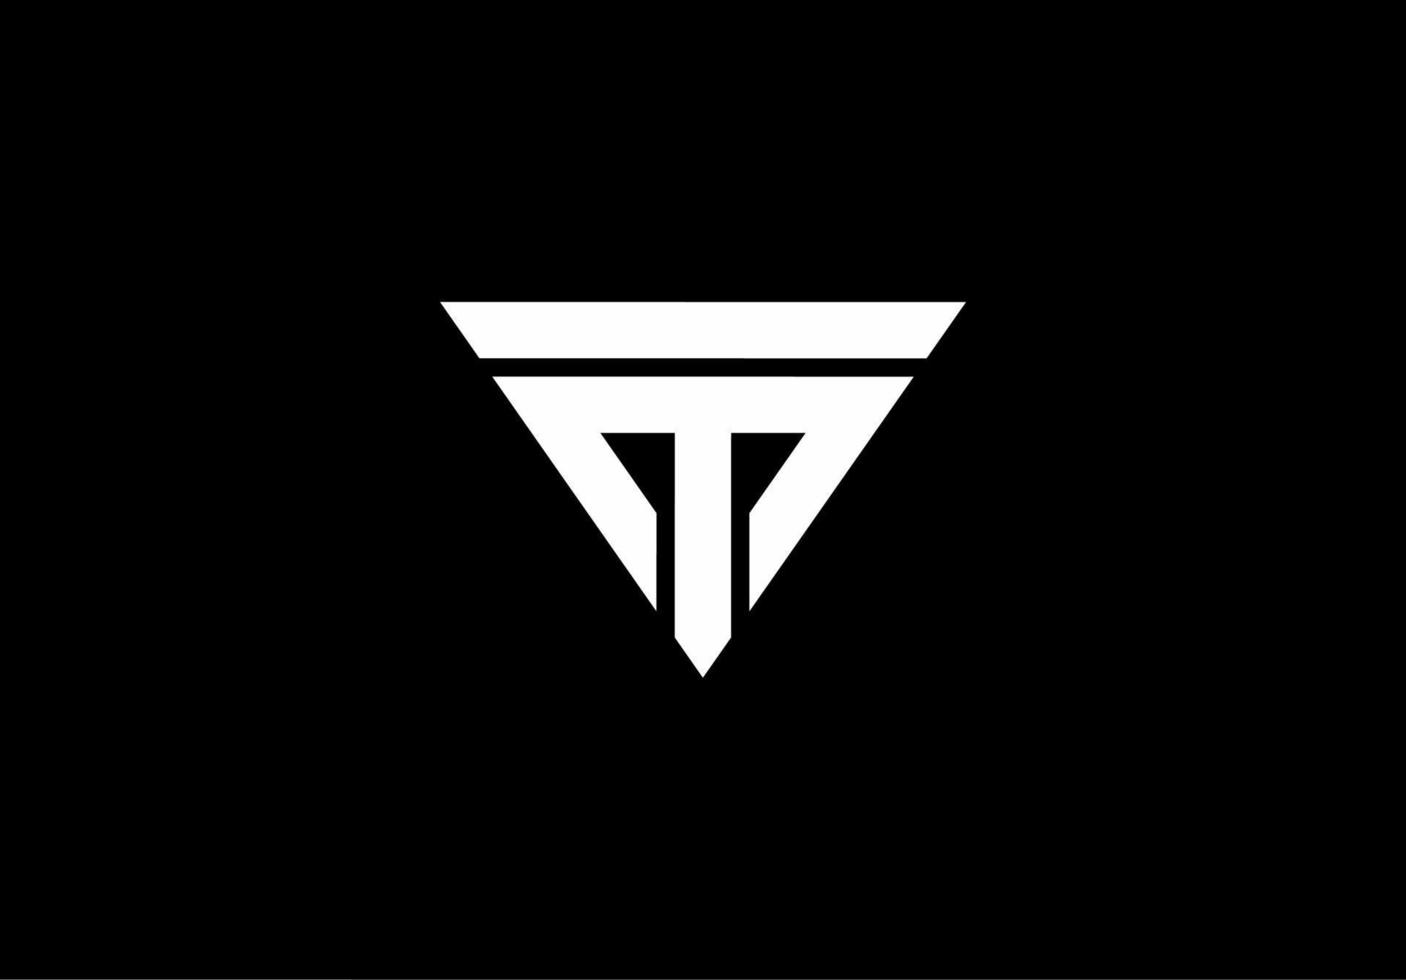 TM Mt t m monogam logo isolated on black background vector